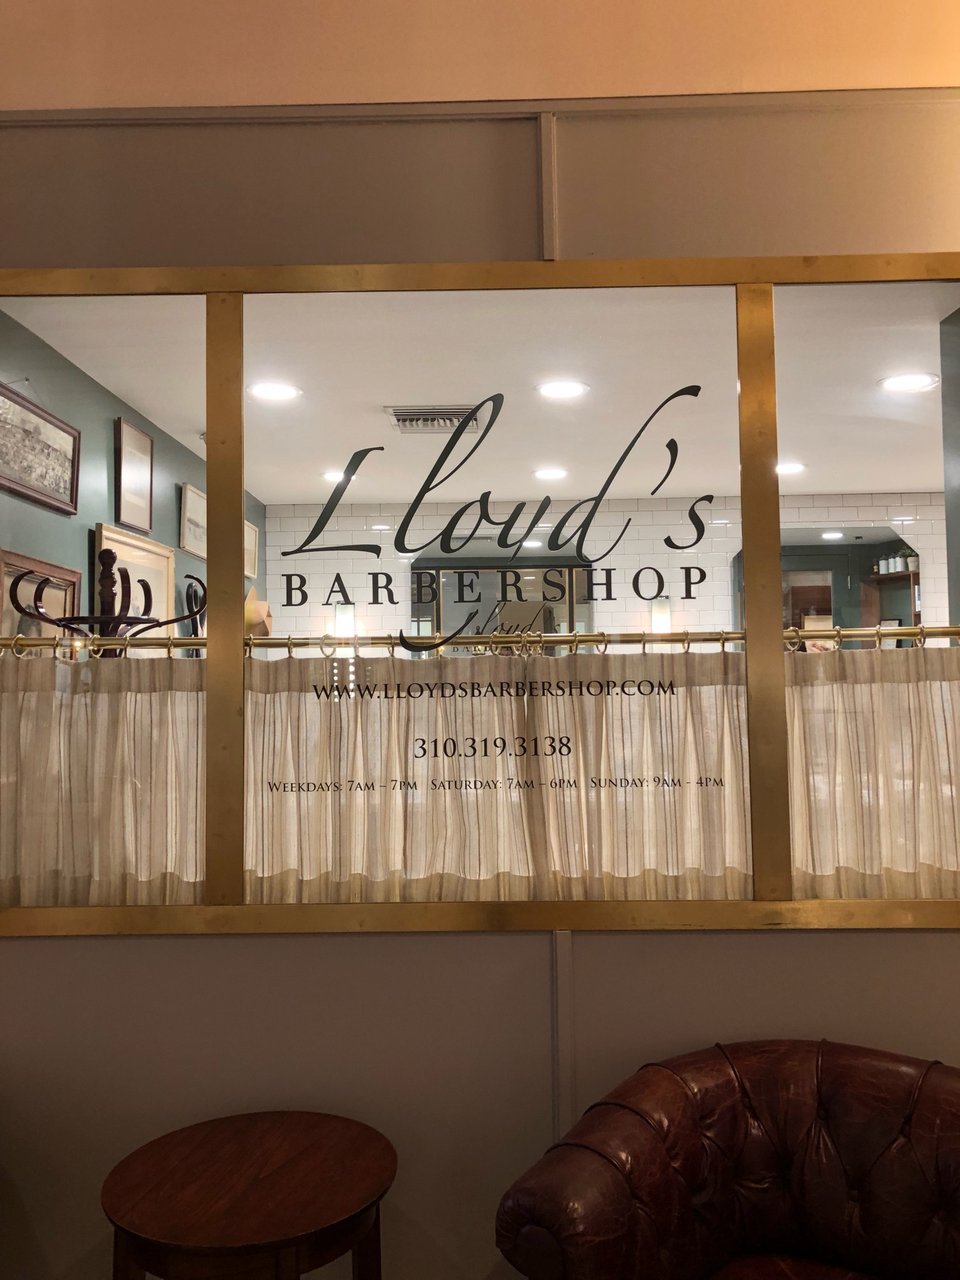 Lloyd's Barbershop